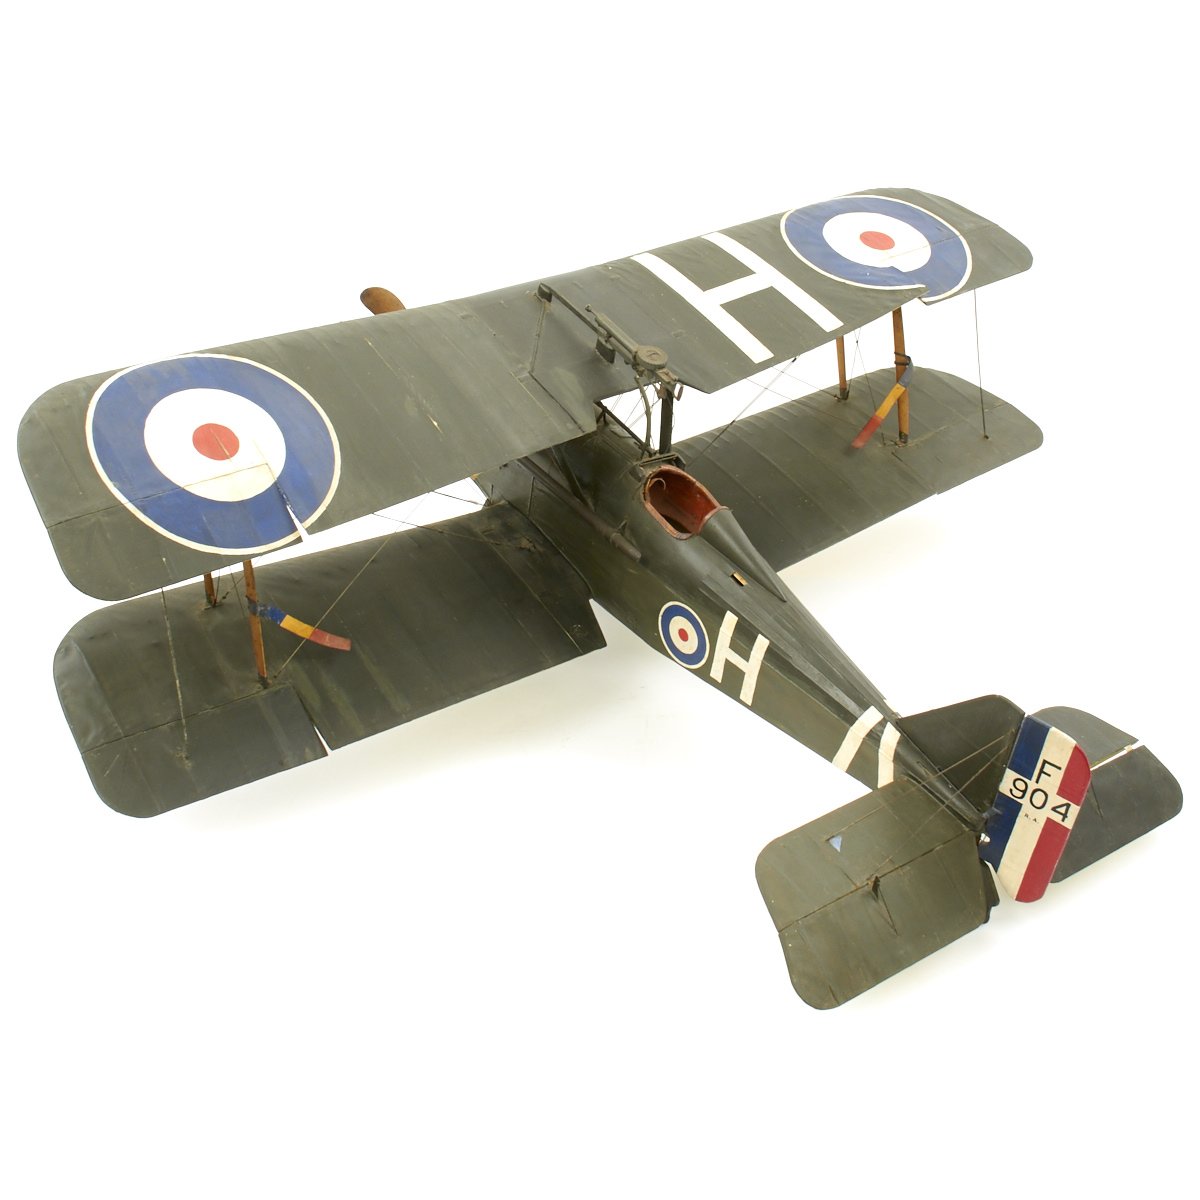 Original British Wwi Royal Aircraft Se5 Large Scale Model Plane For 19